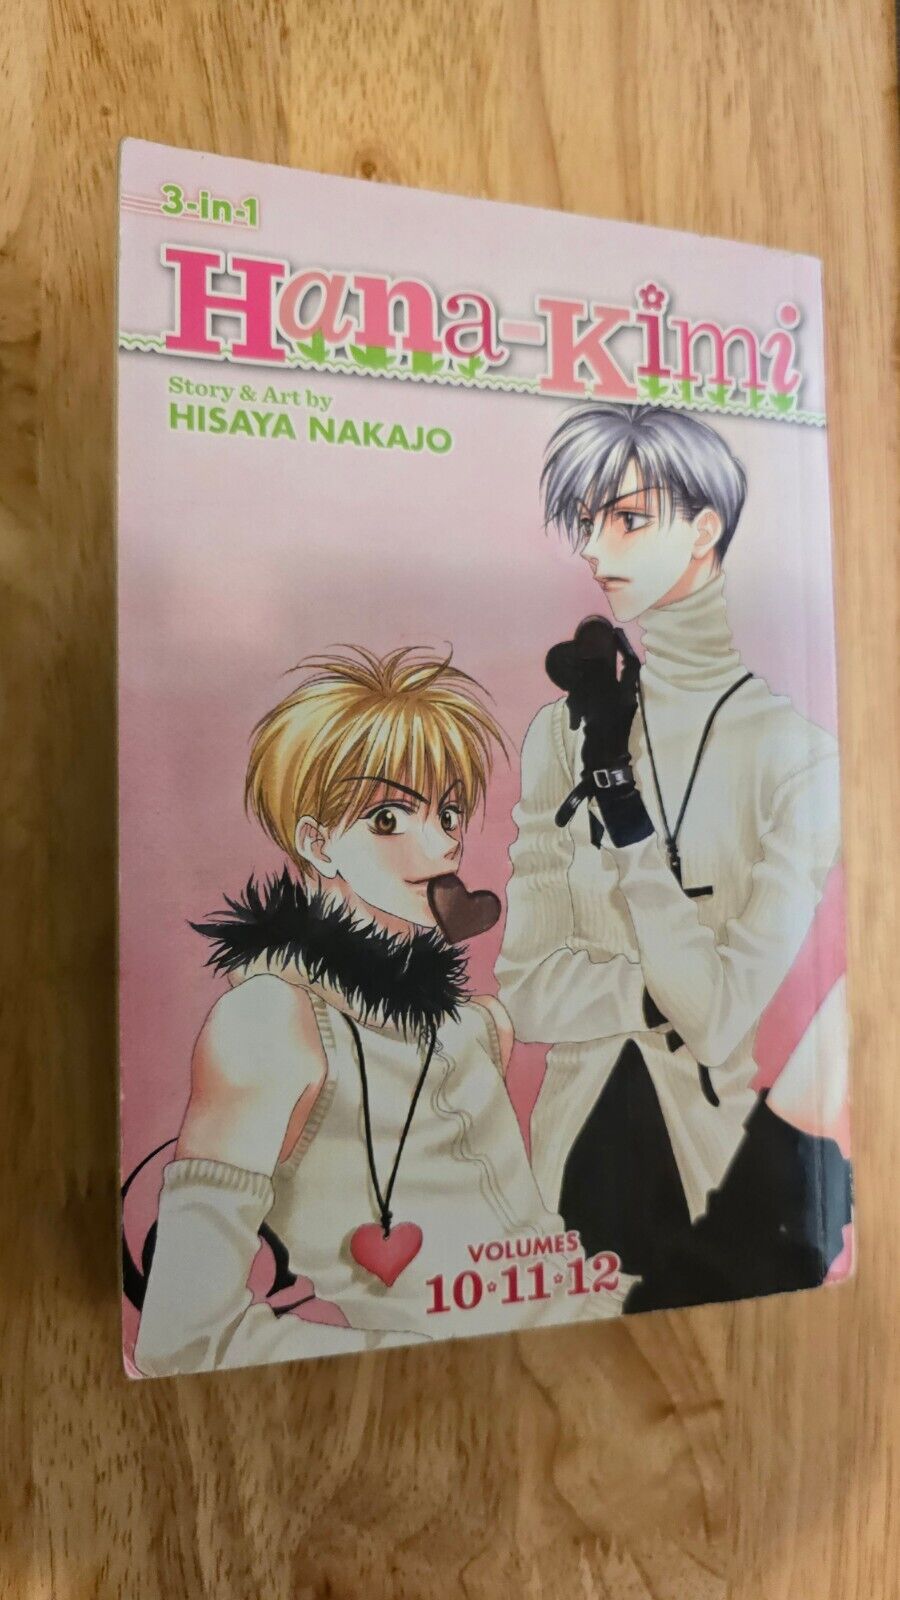 Hana-Kimi, Volumes 10, 11, 12 manga (Hana-Kimi (3-in-1 Edition)) - Paperback